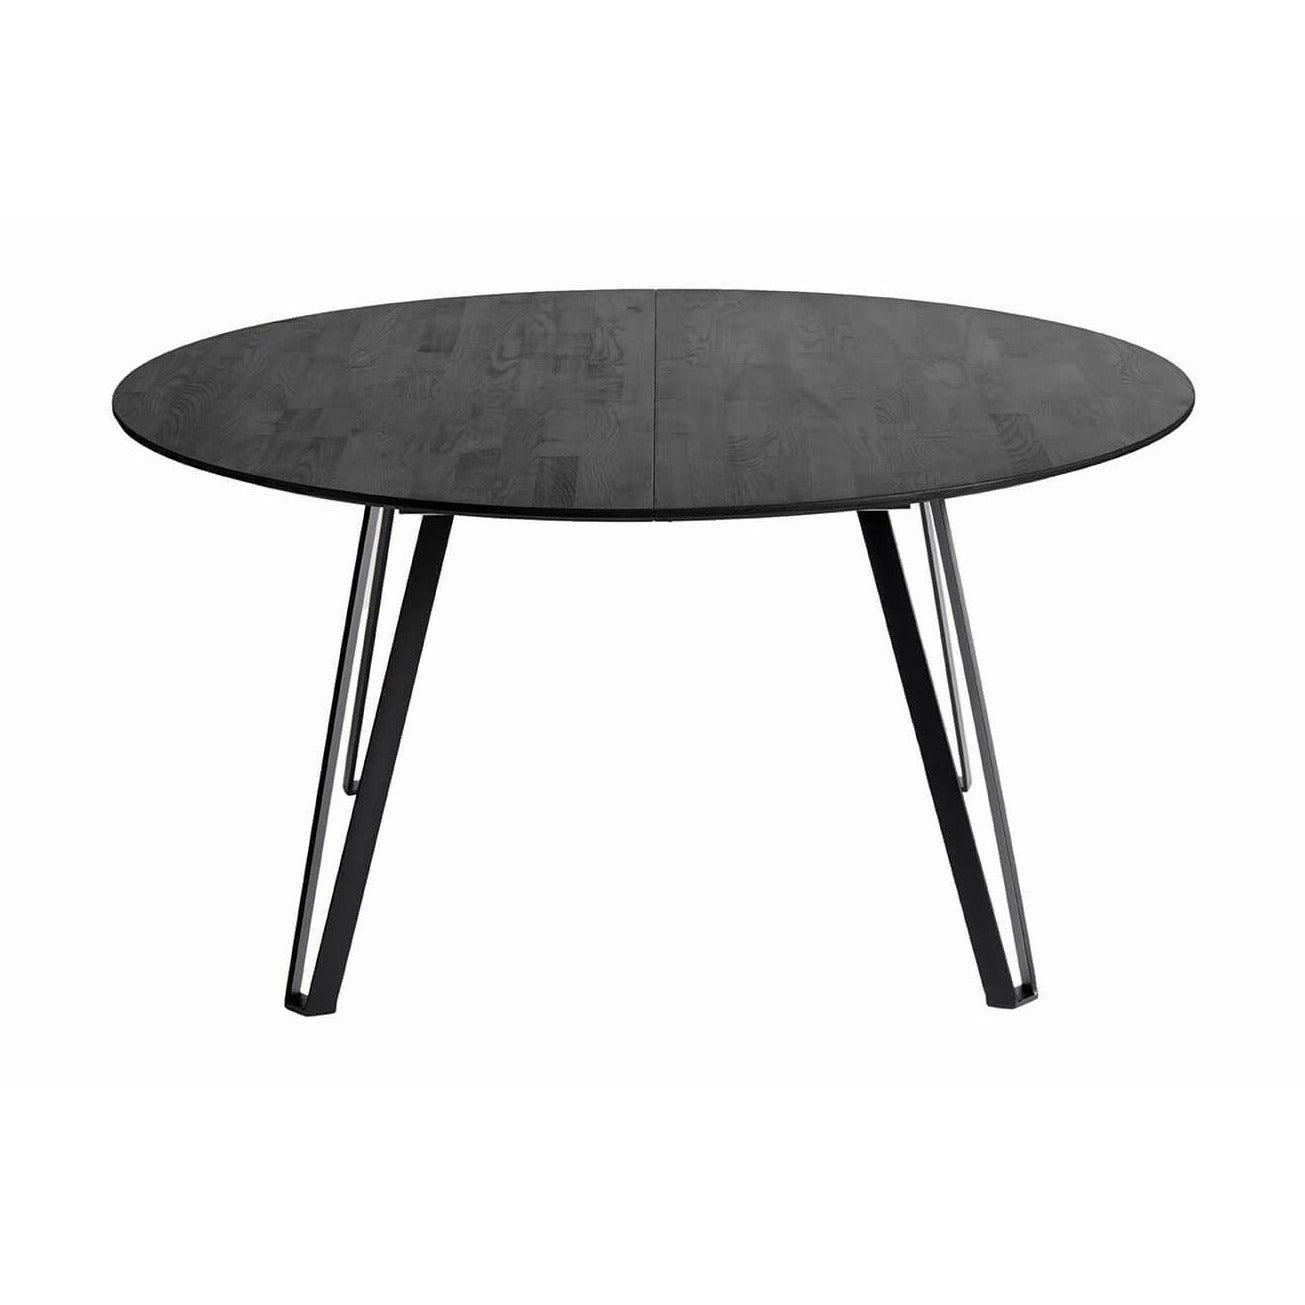 Muubs Space Jading Table Black, Ø150 cm